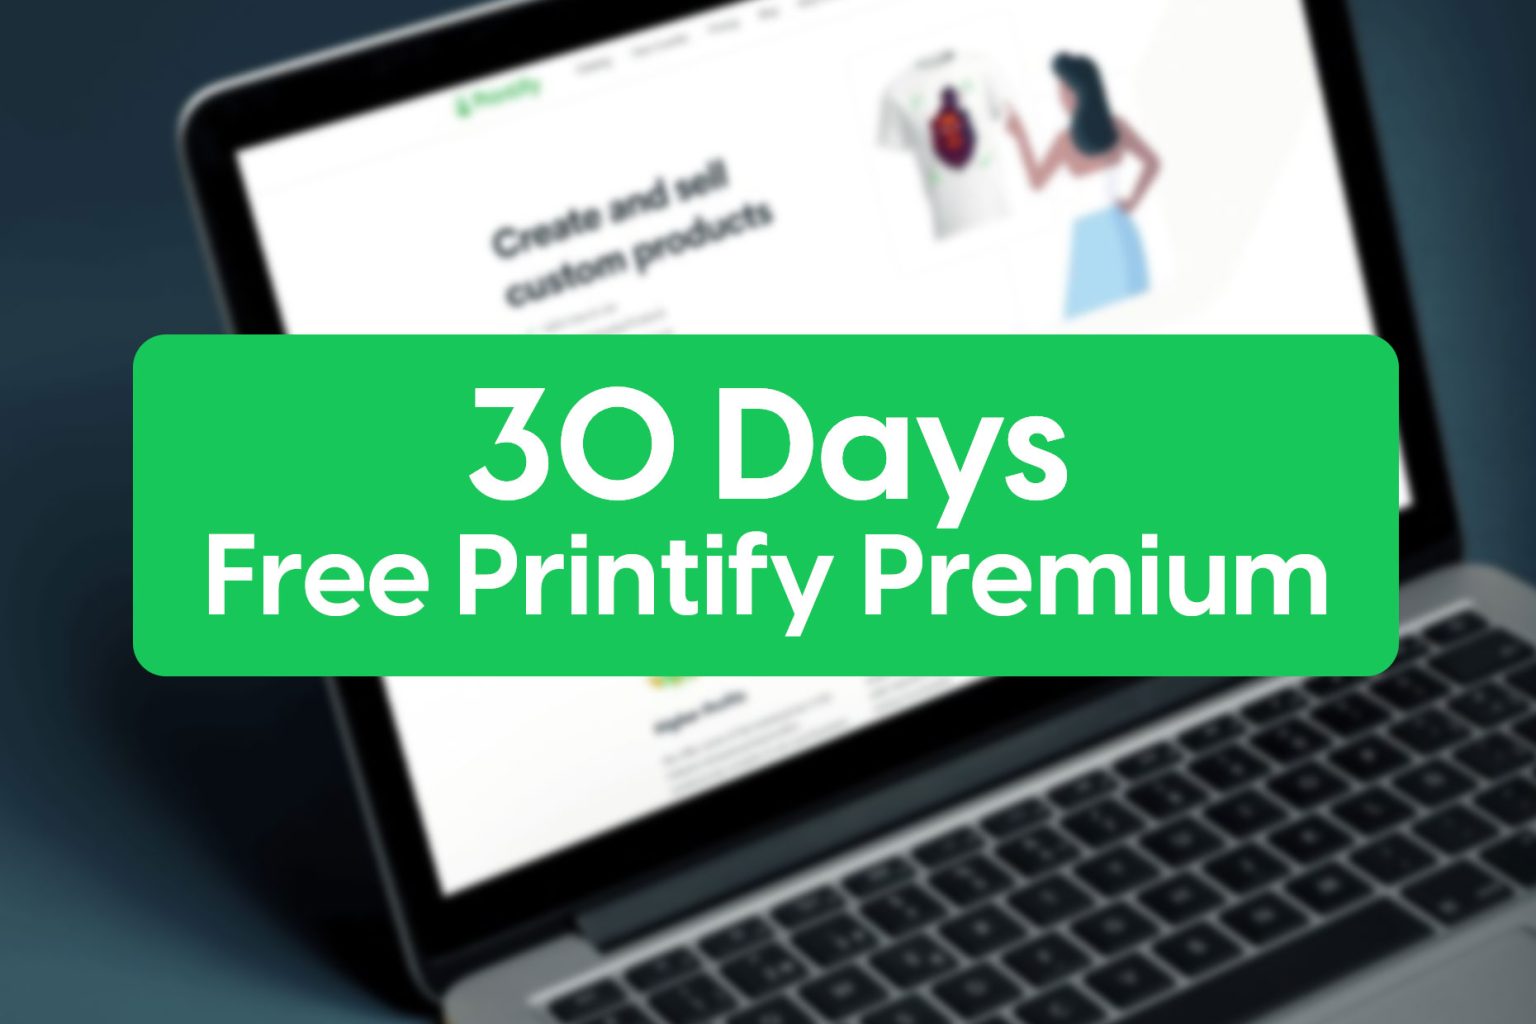 Free Printify Premium Limited Time Offer Tom